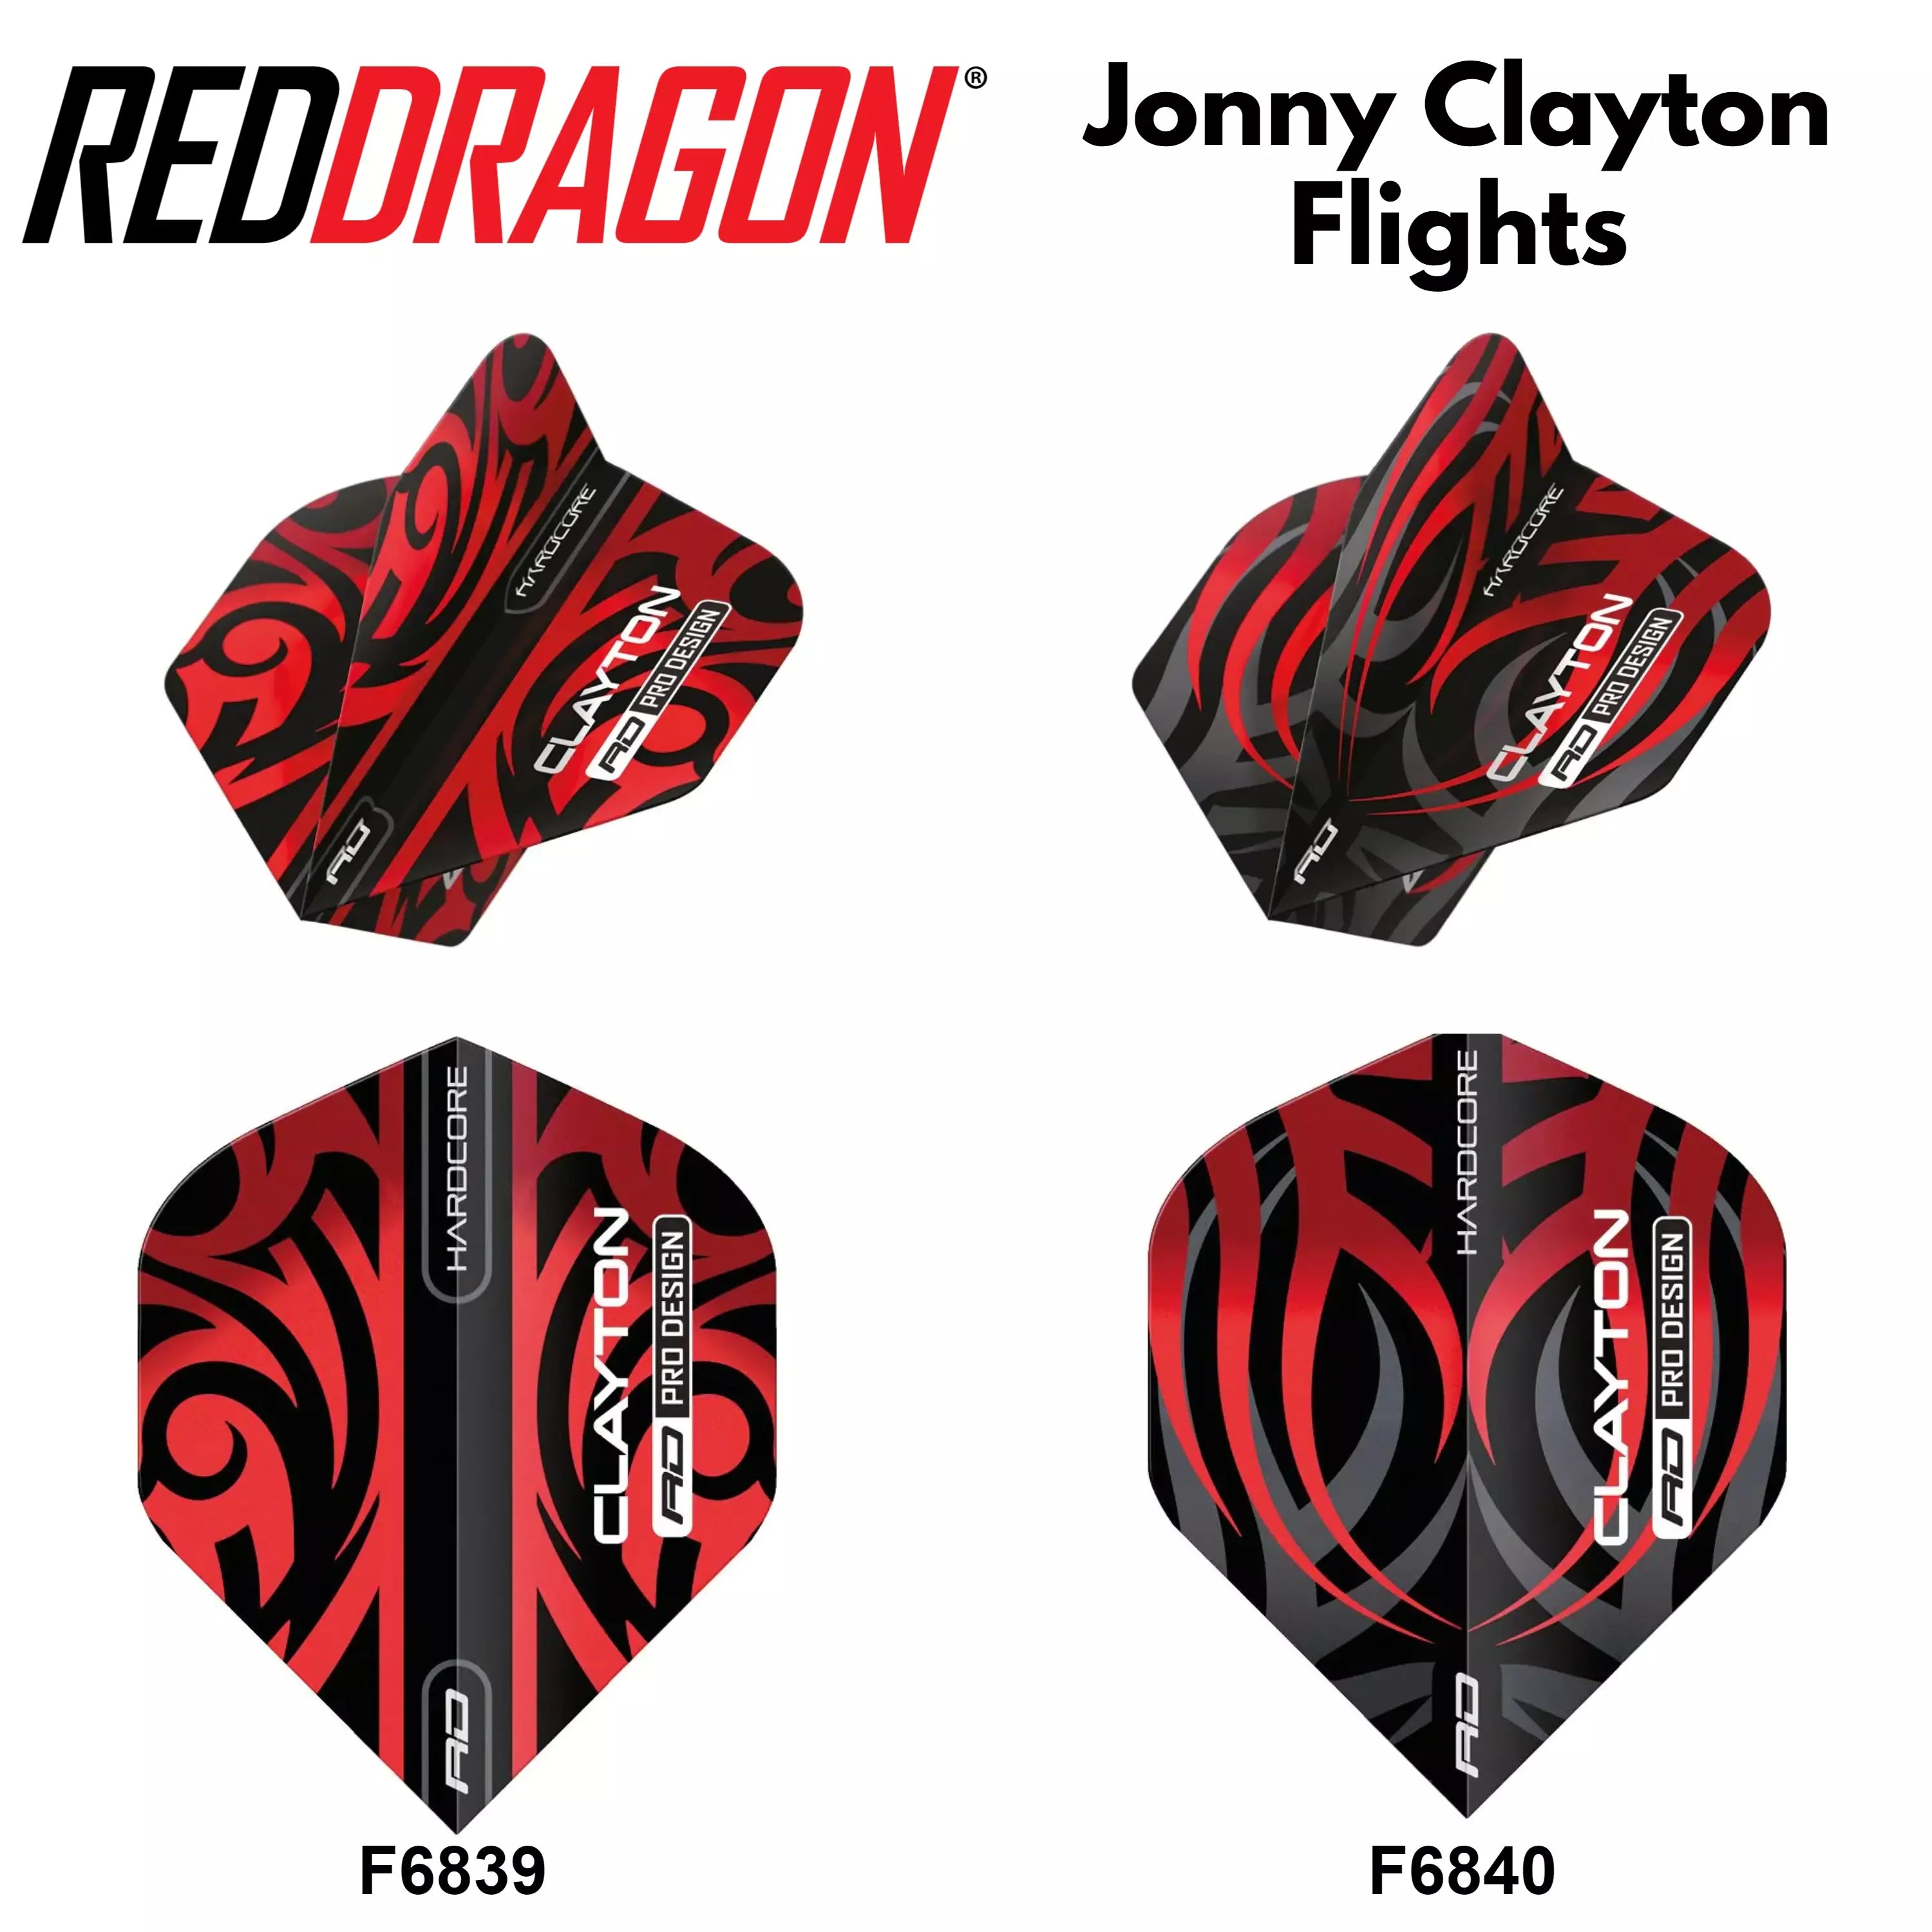 Red Dragon Hardcore Jonny Clayton The Ferret Flights Vol 2